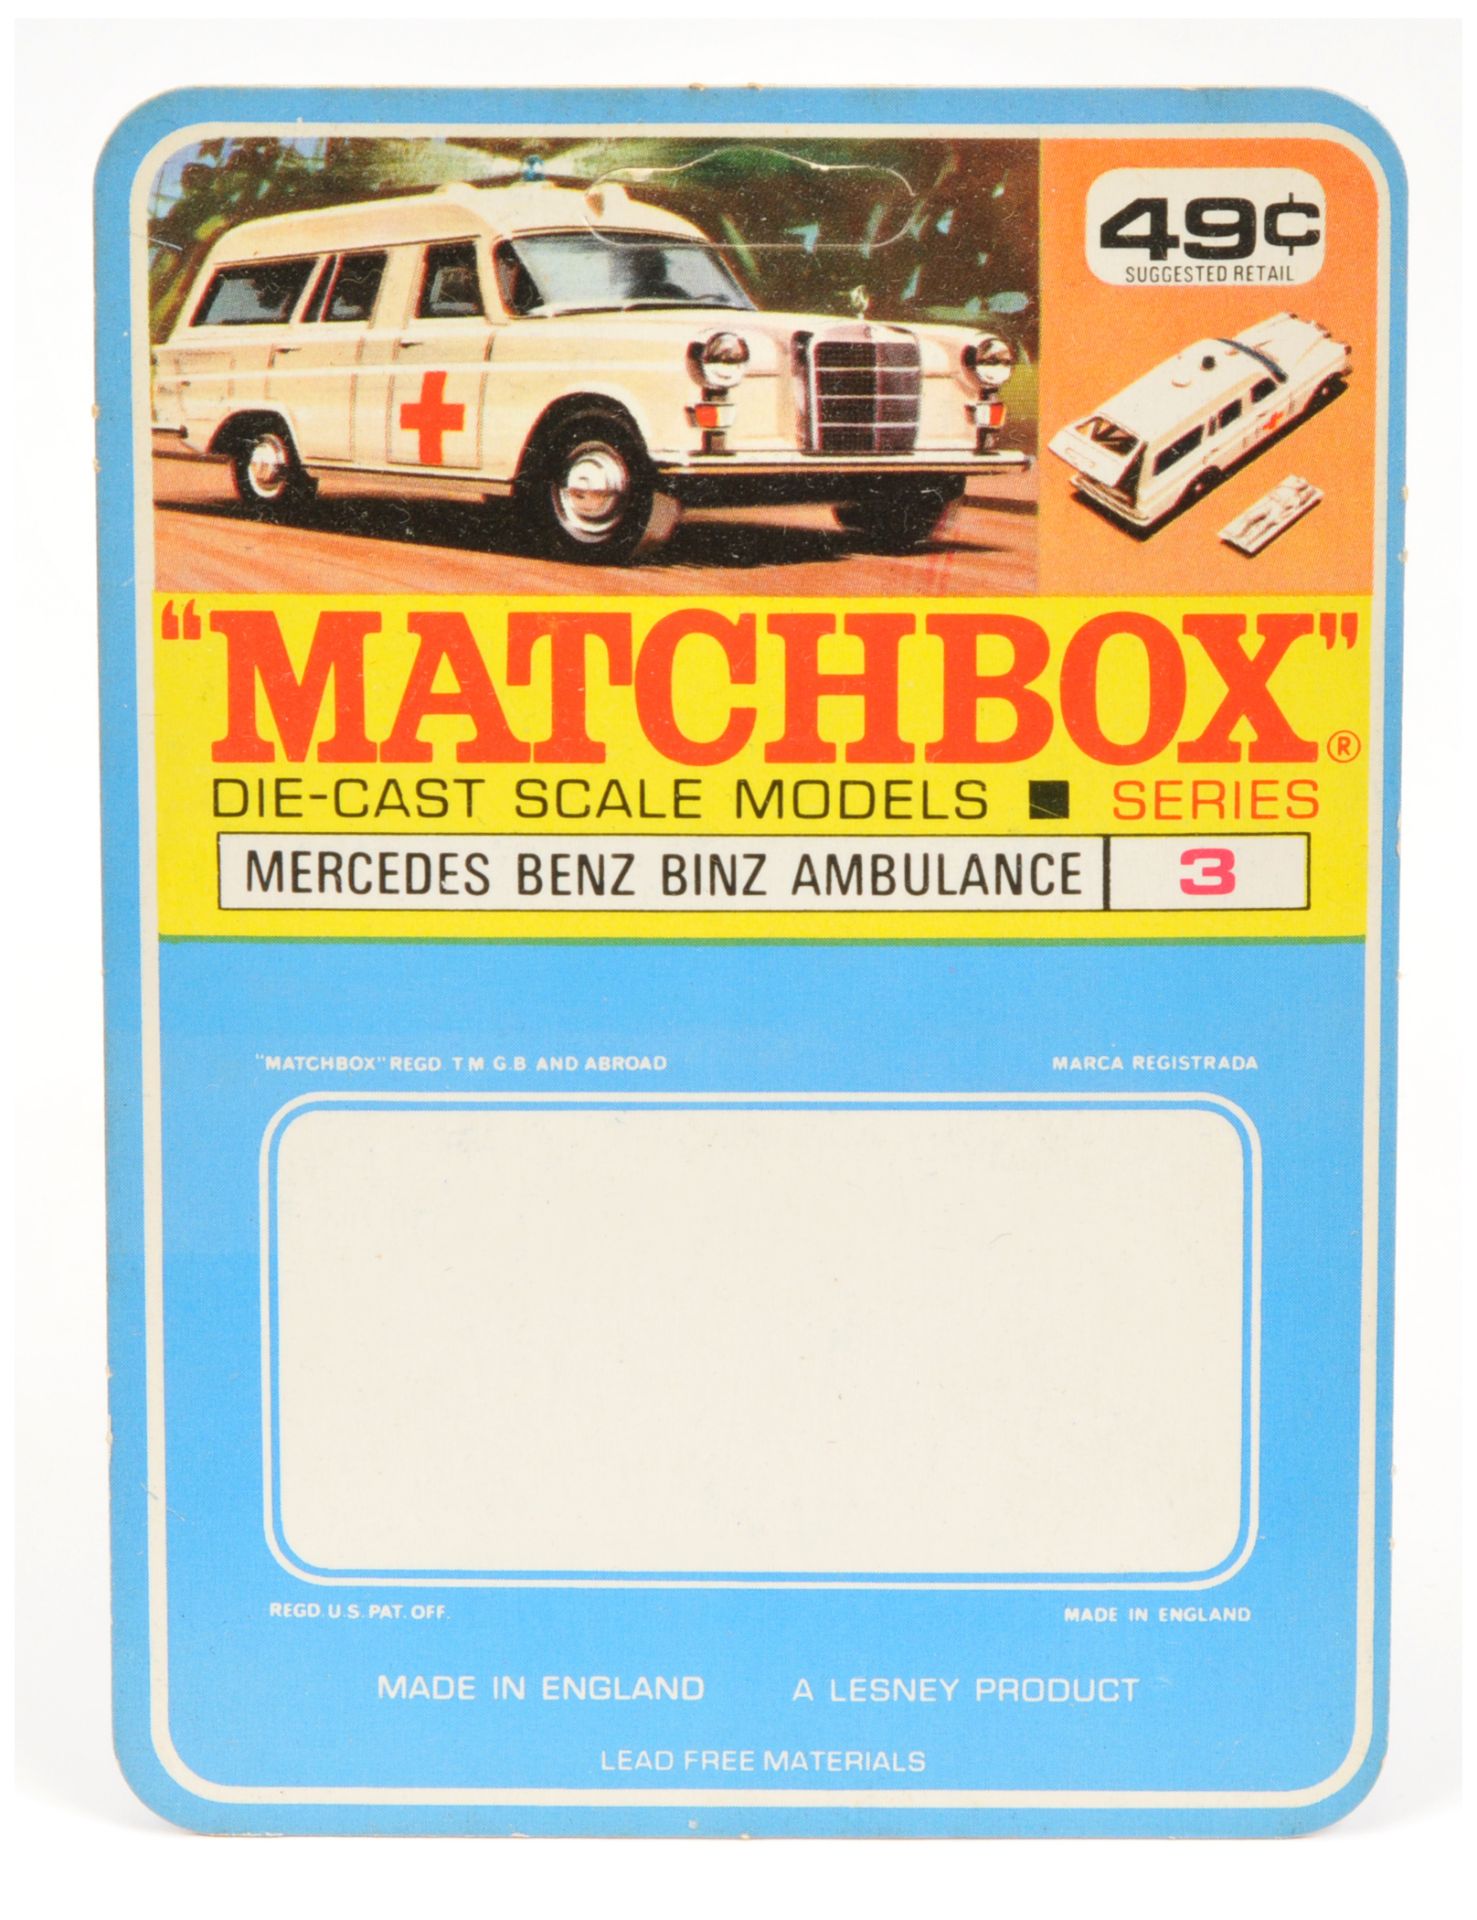 Matchbox Sample North American Market Blister Pack Backing Card for 3c Mercedes Benz Binz Ambulance